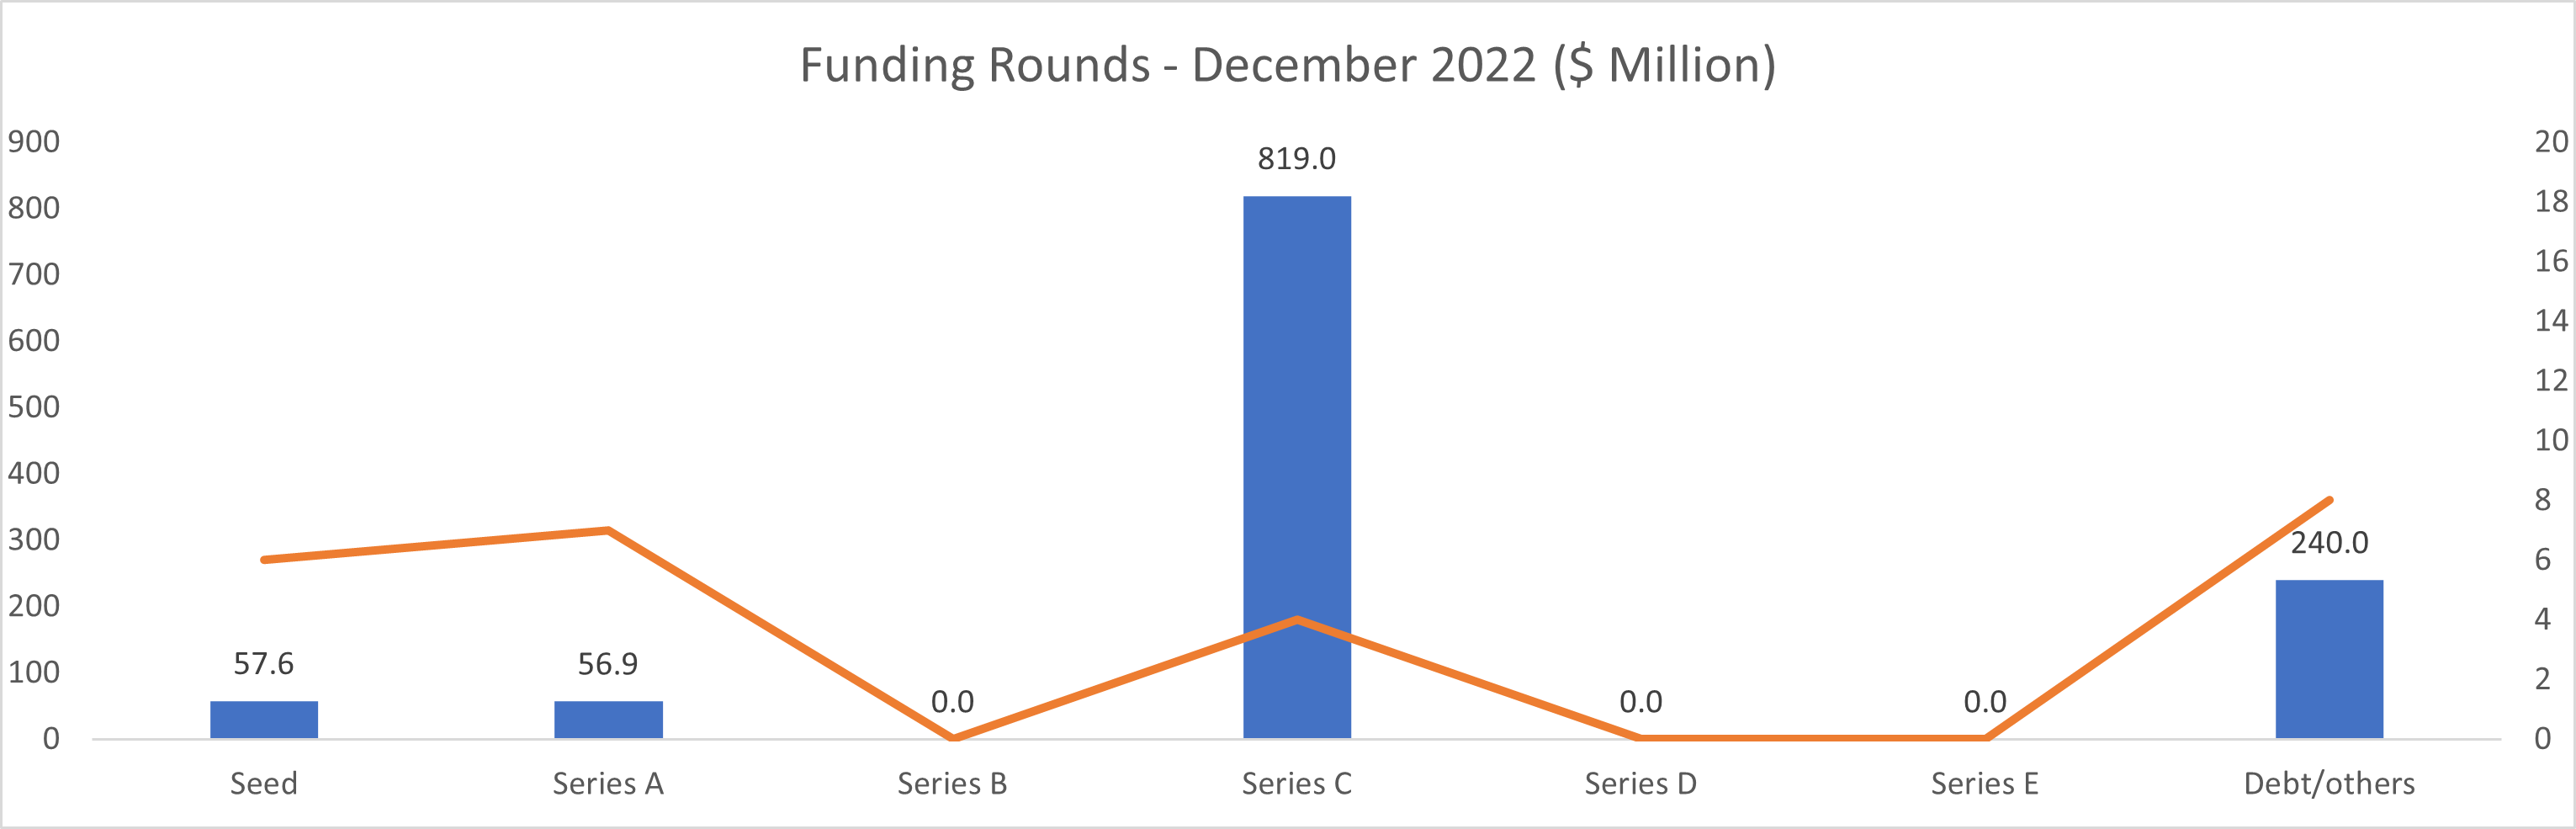 Funding rounds December 2022